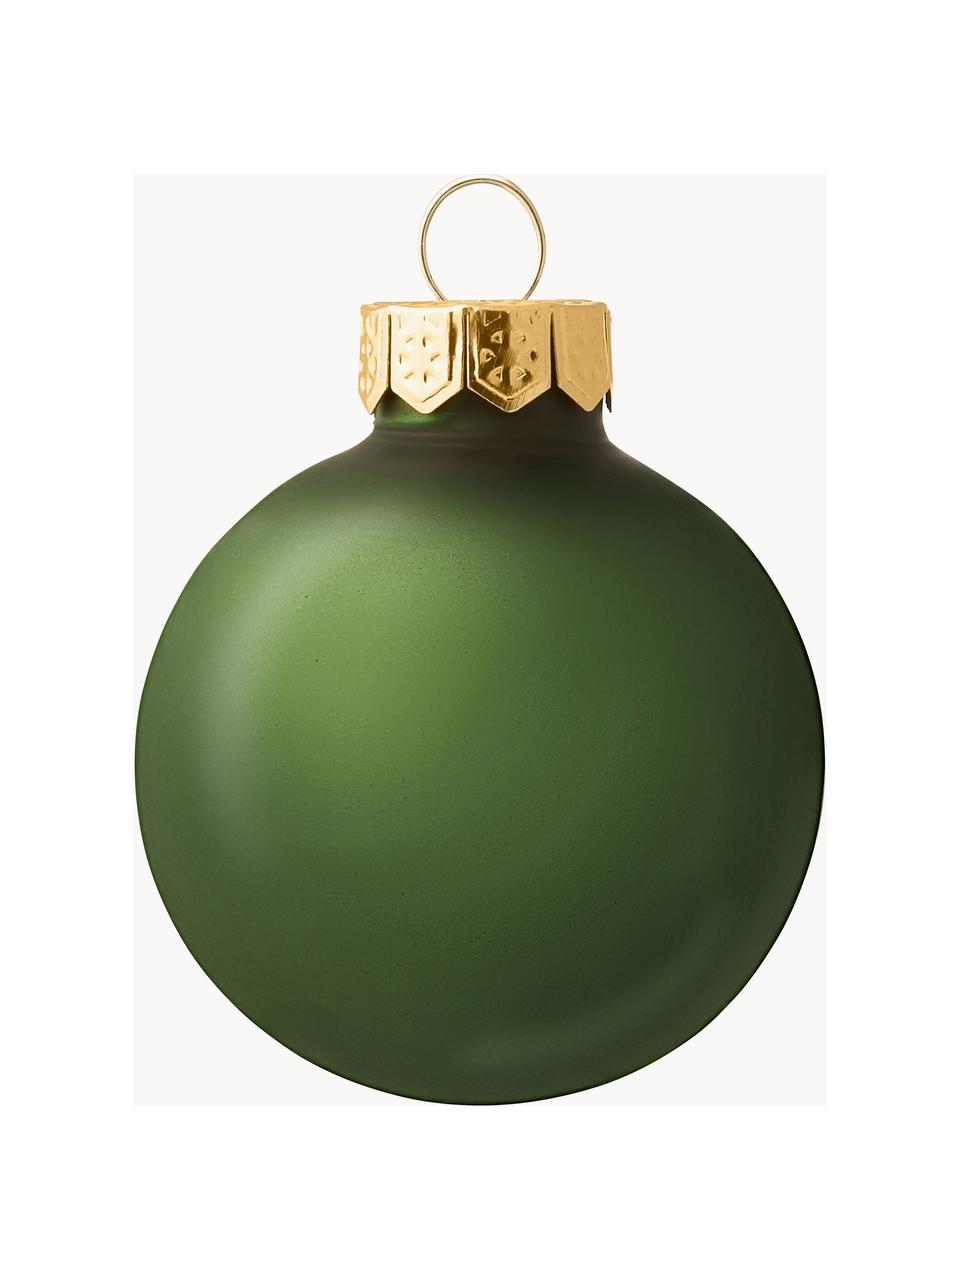 Palline di Natale opache/lucide Evergreen, varie misure, Verde scuro, Ø 10 cm, 4 pz